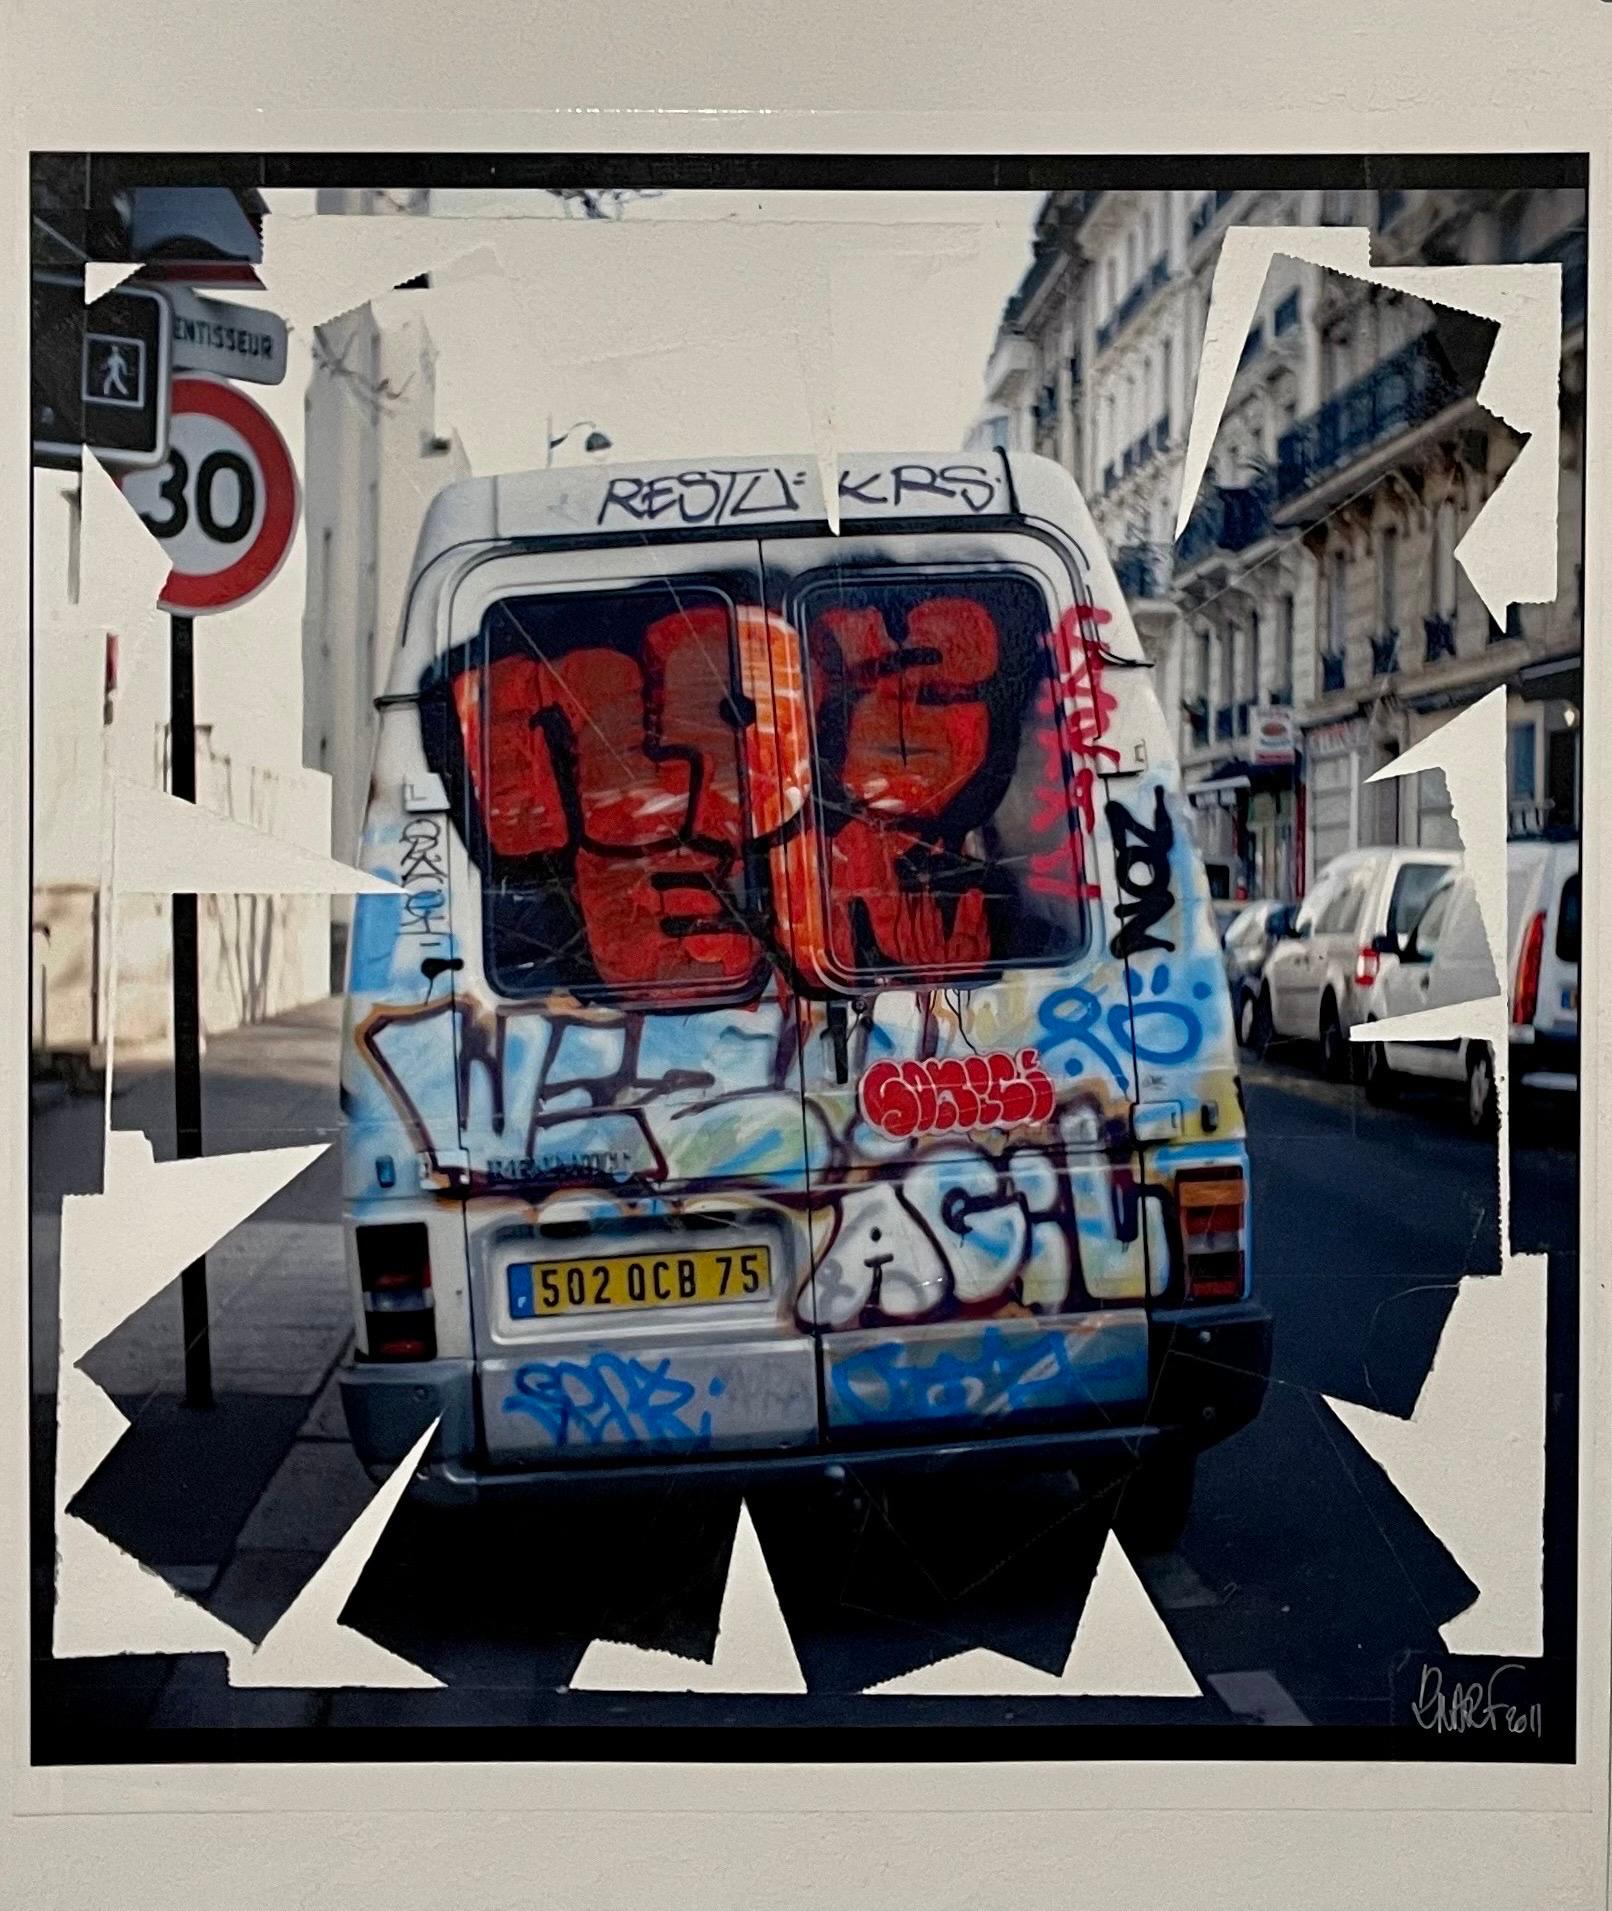 K-Narf Color Photo Graffiti, Adhesive Tape Altered Street Art Photograph Collage